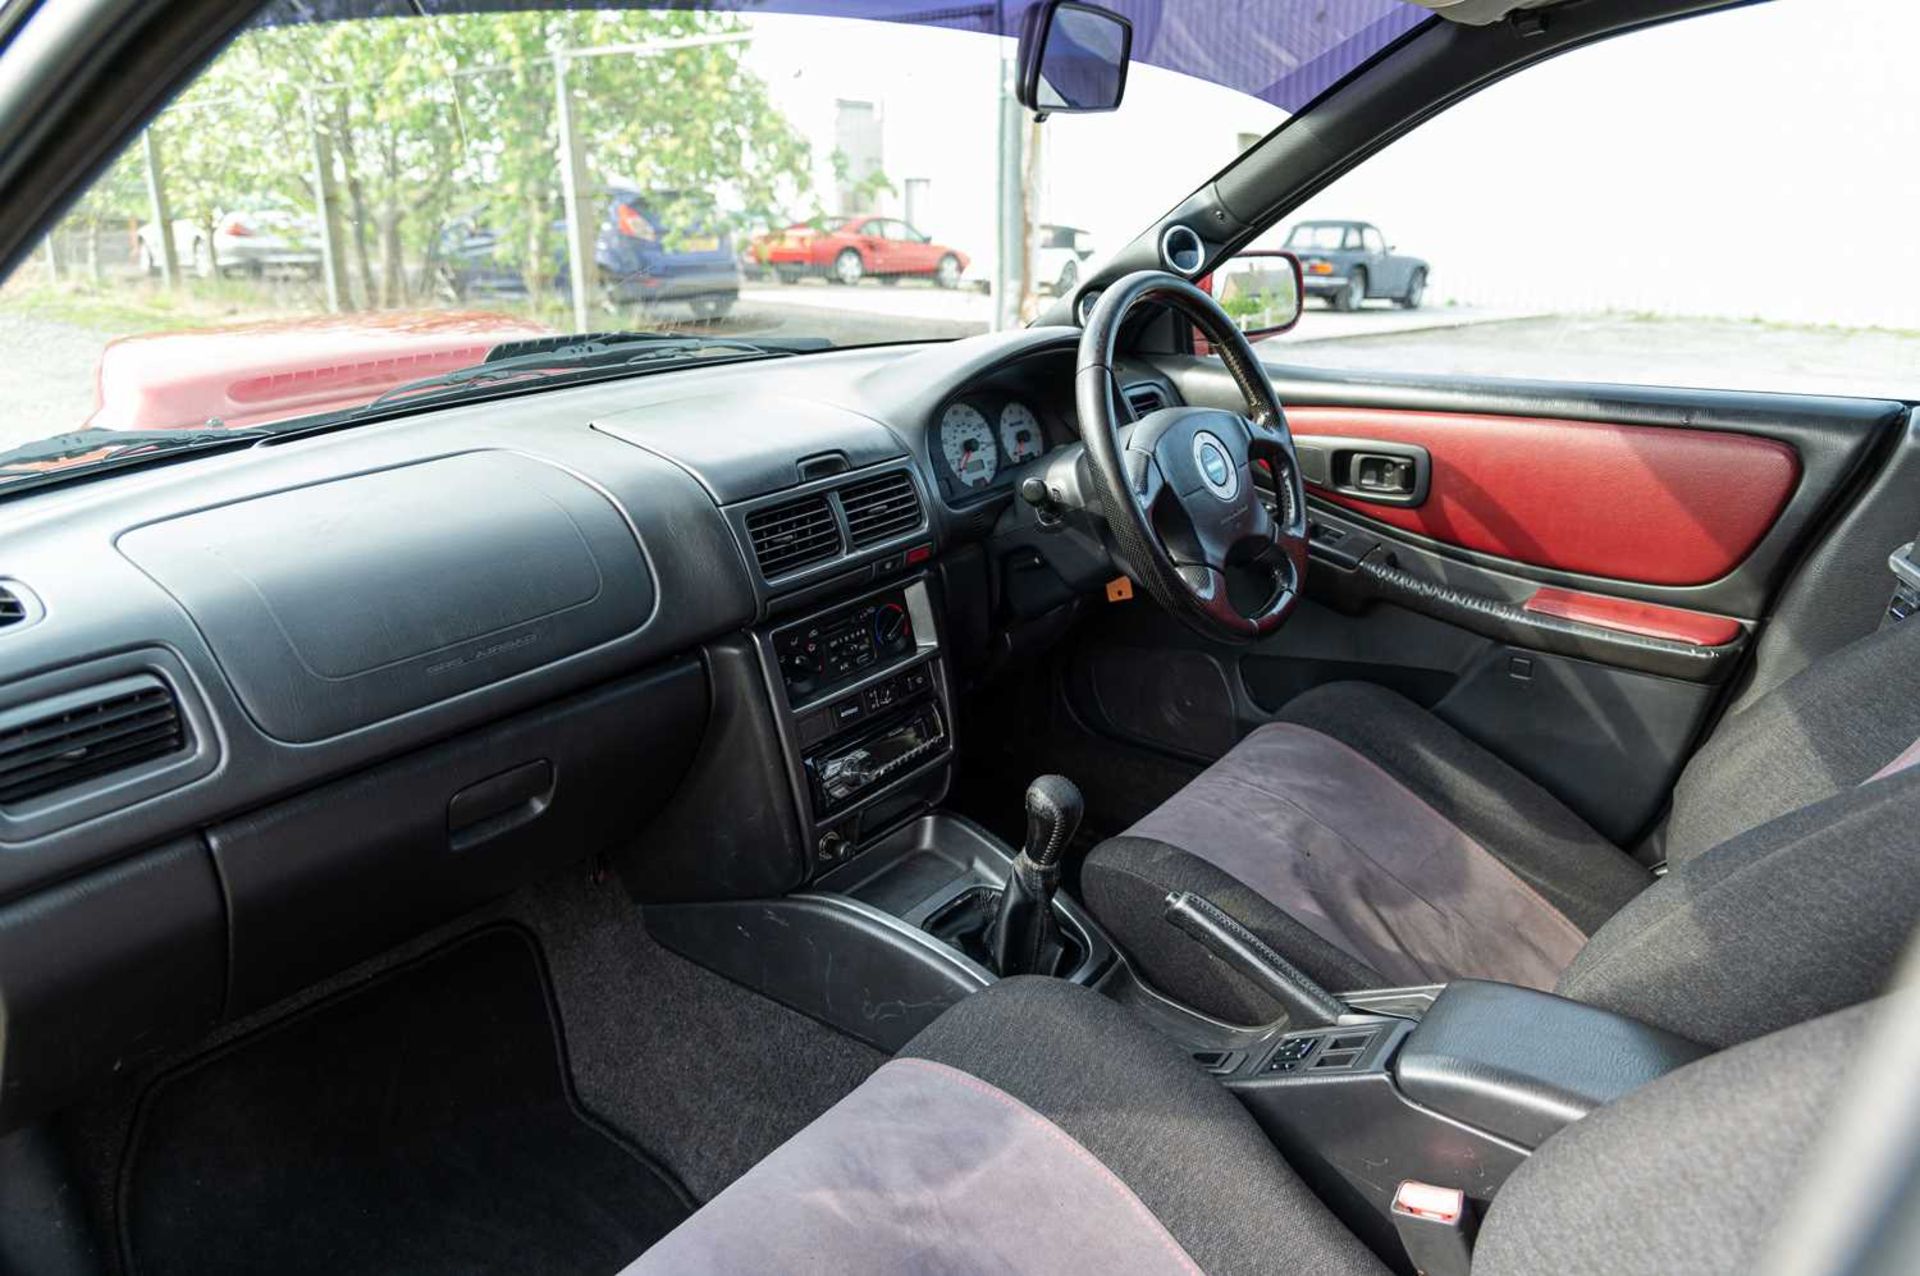 2000 Subaru Impreza 2000 Turbo ***NO RESERVE*** Featuring a plethora of desirable upgrades - Image 66 of 70